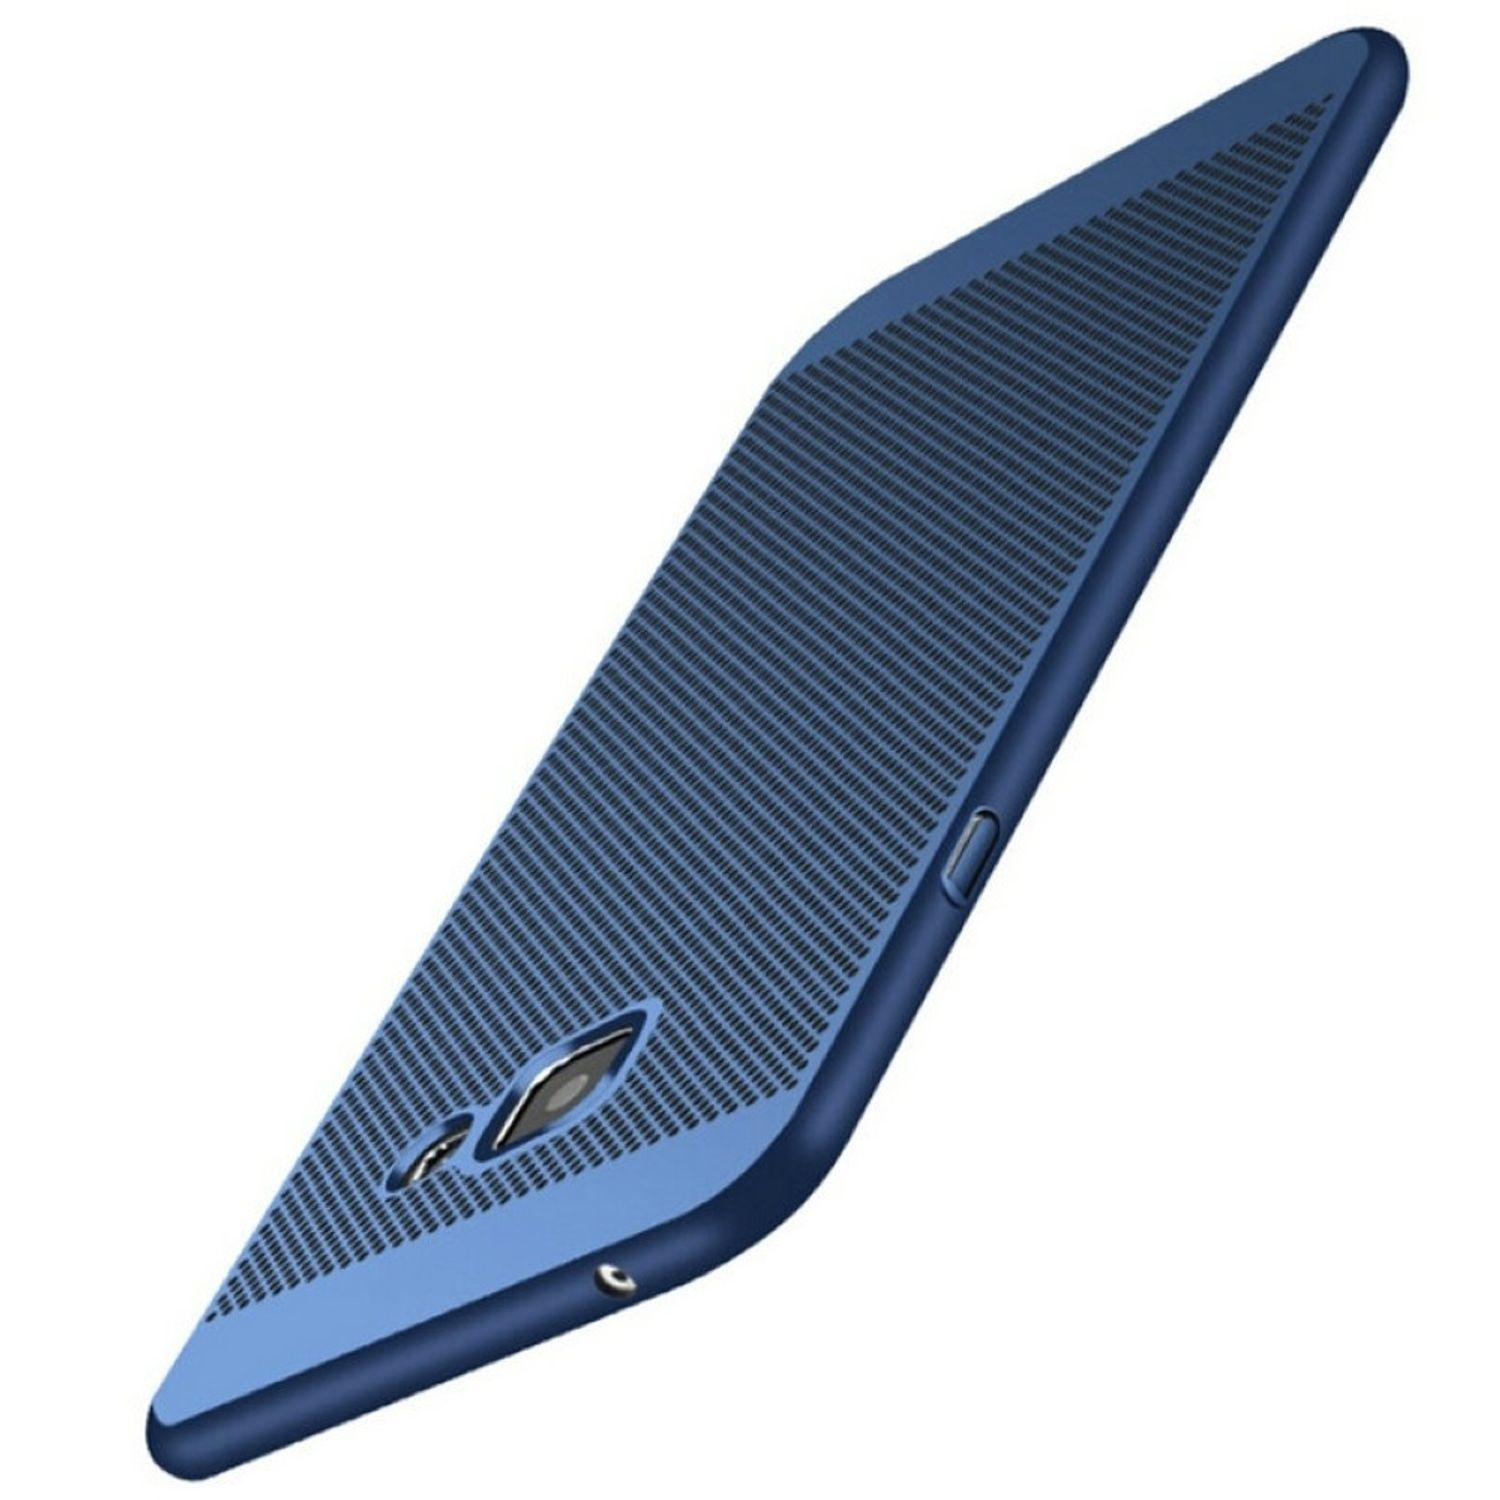 A3 Samsung, KÖNIG Blau DESIGN (2017), Backcover, Schutzhülle, Galaxy